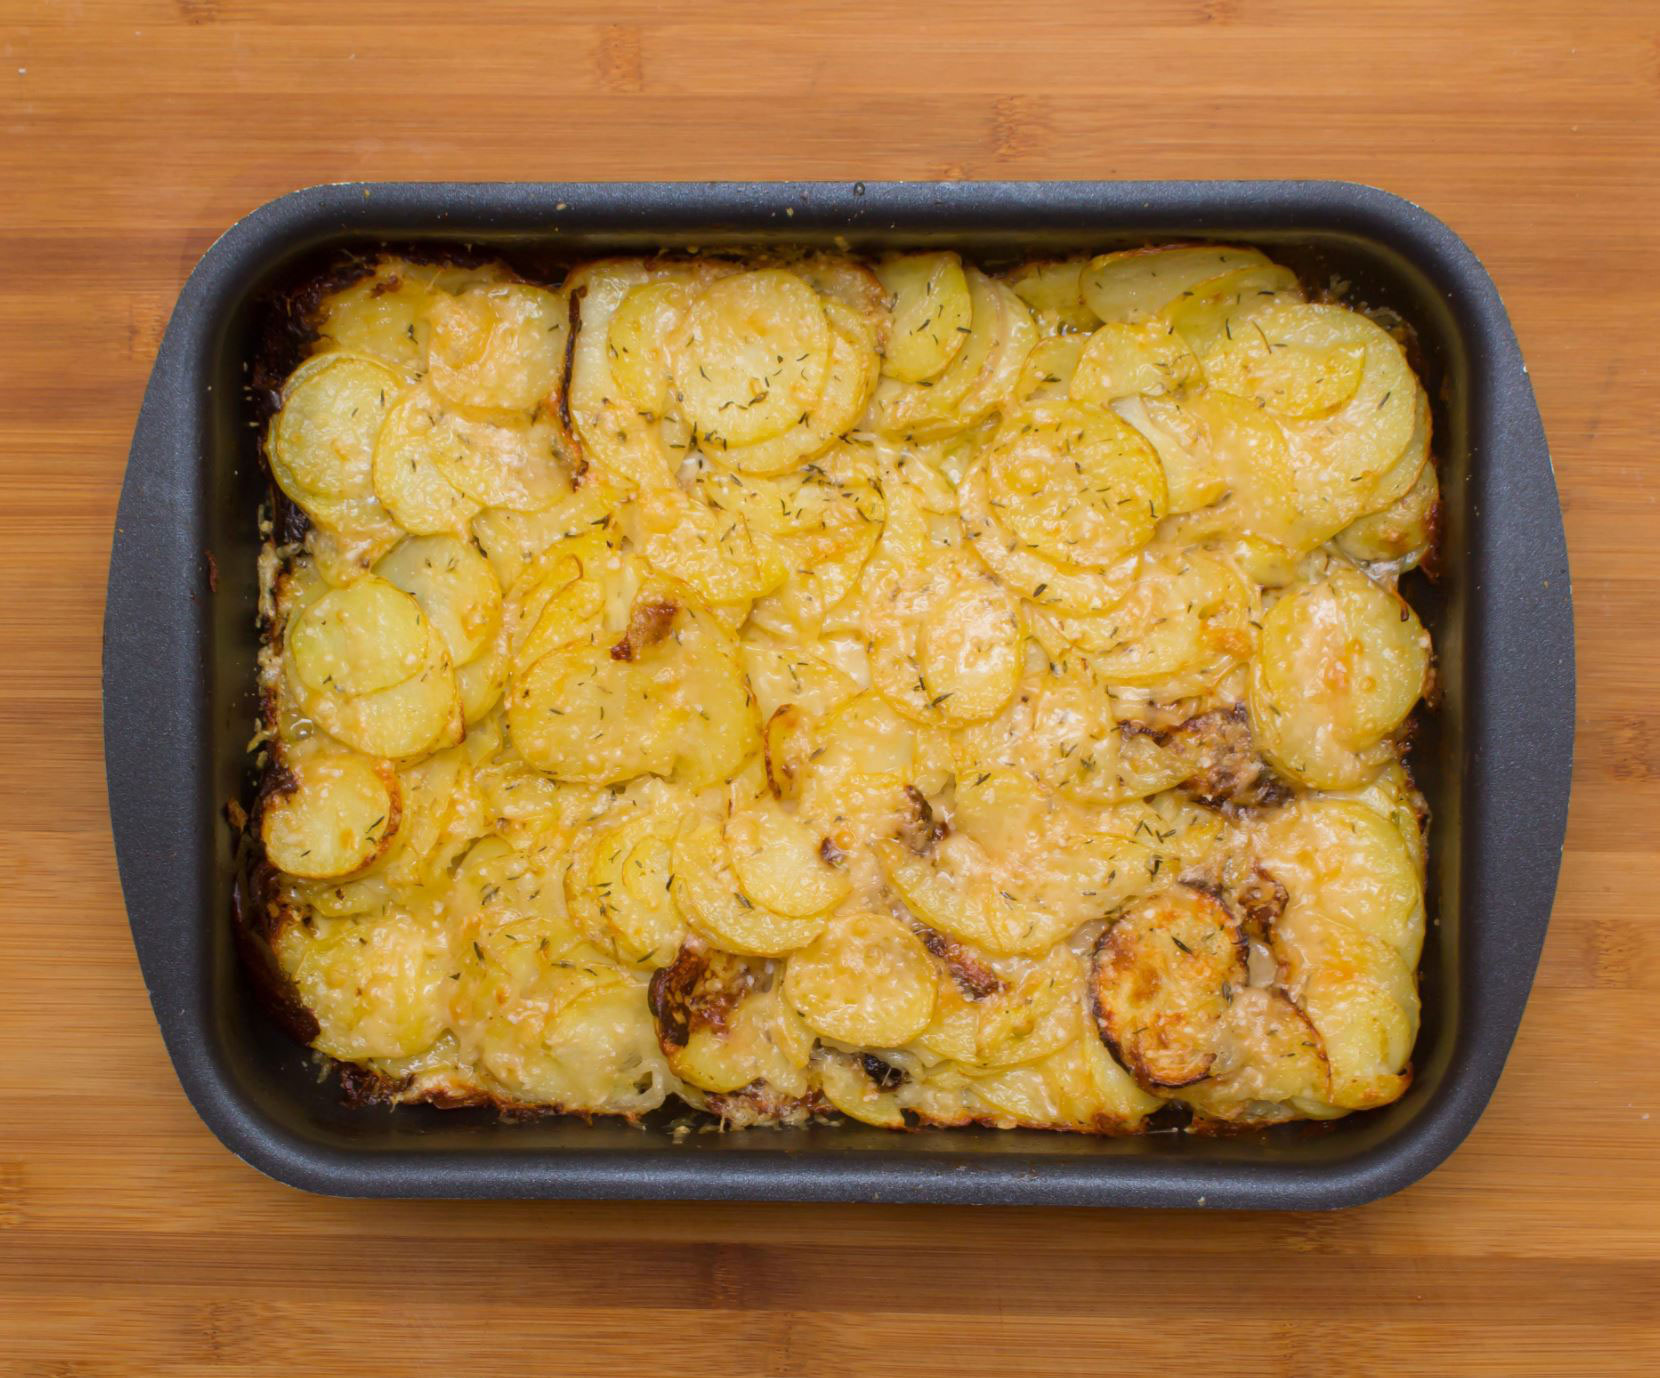 Kartoffelgratin - Bake it easy